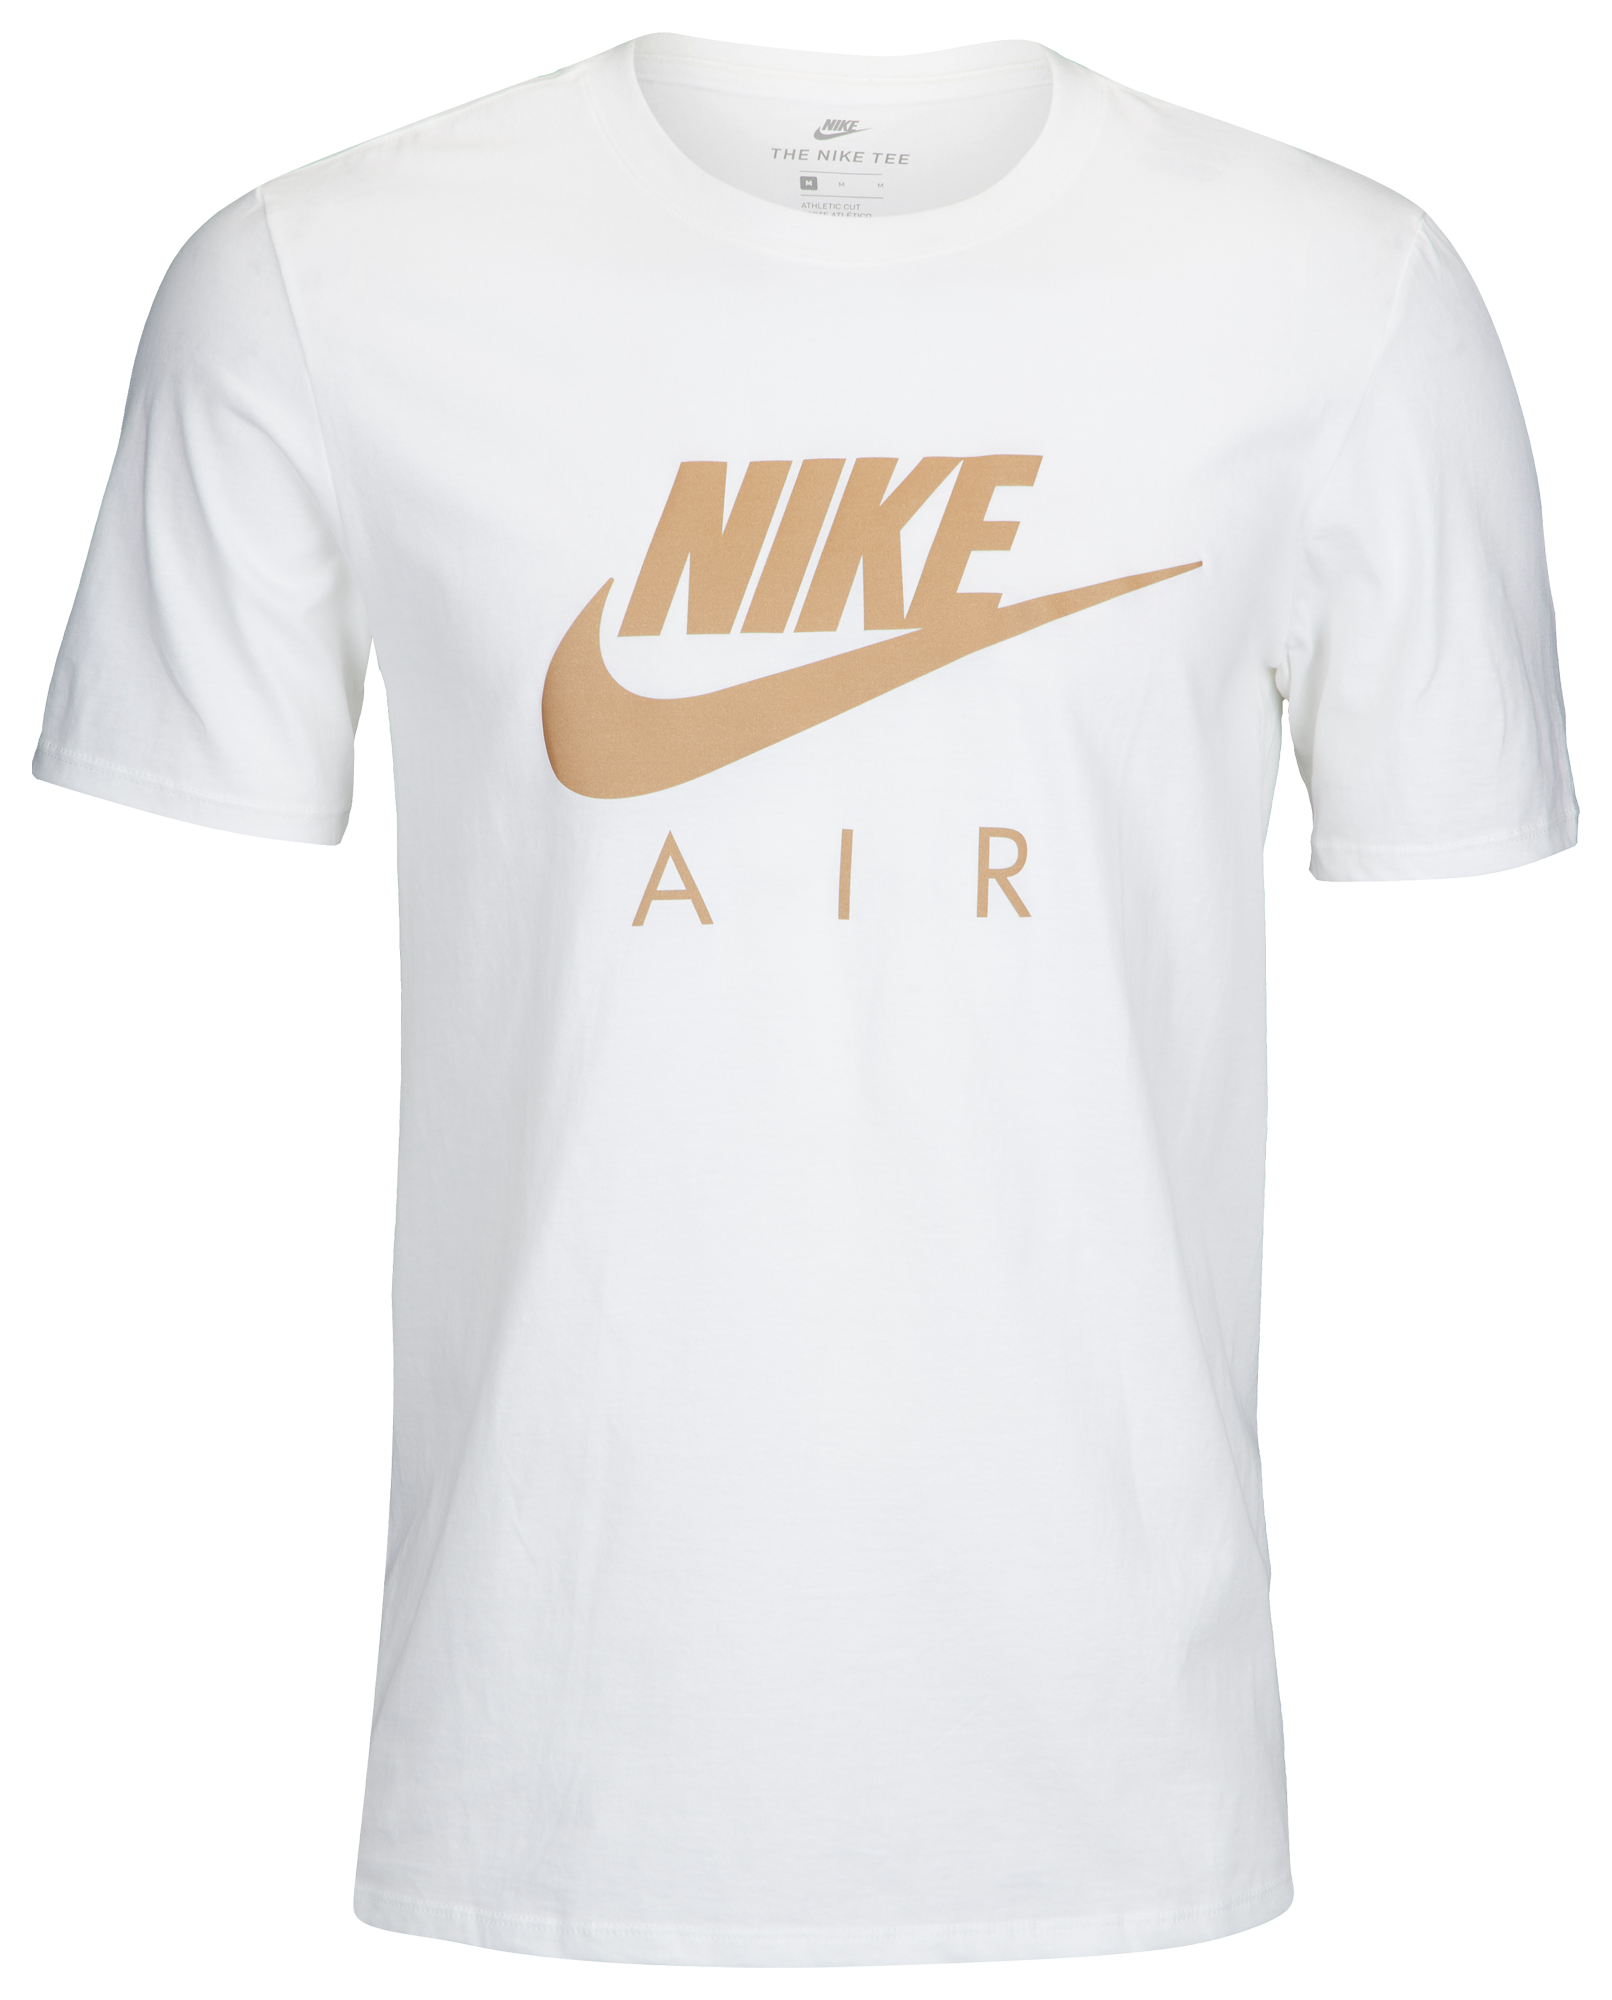 Nike Shirts | Champs Sports